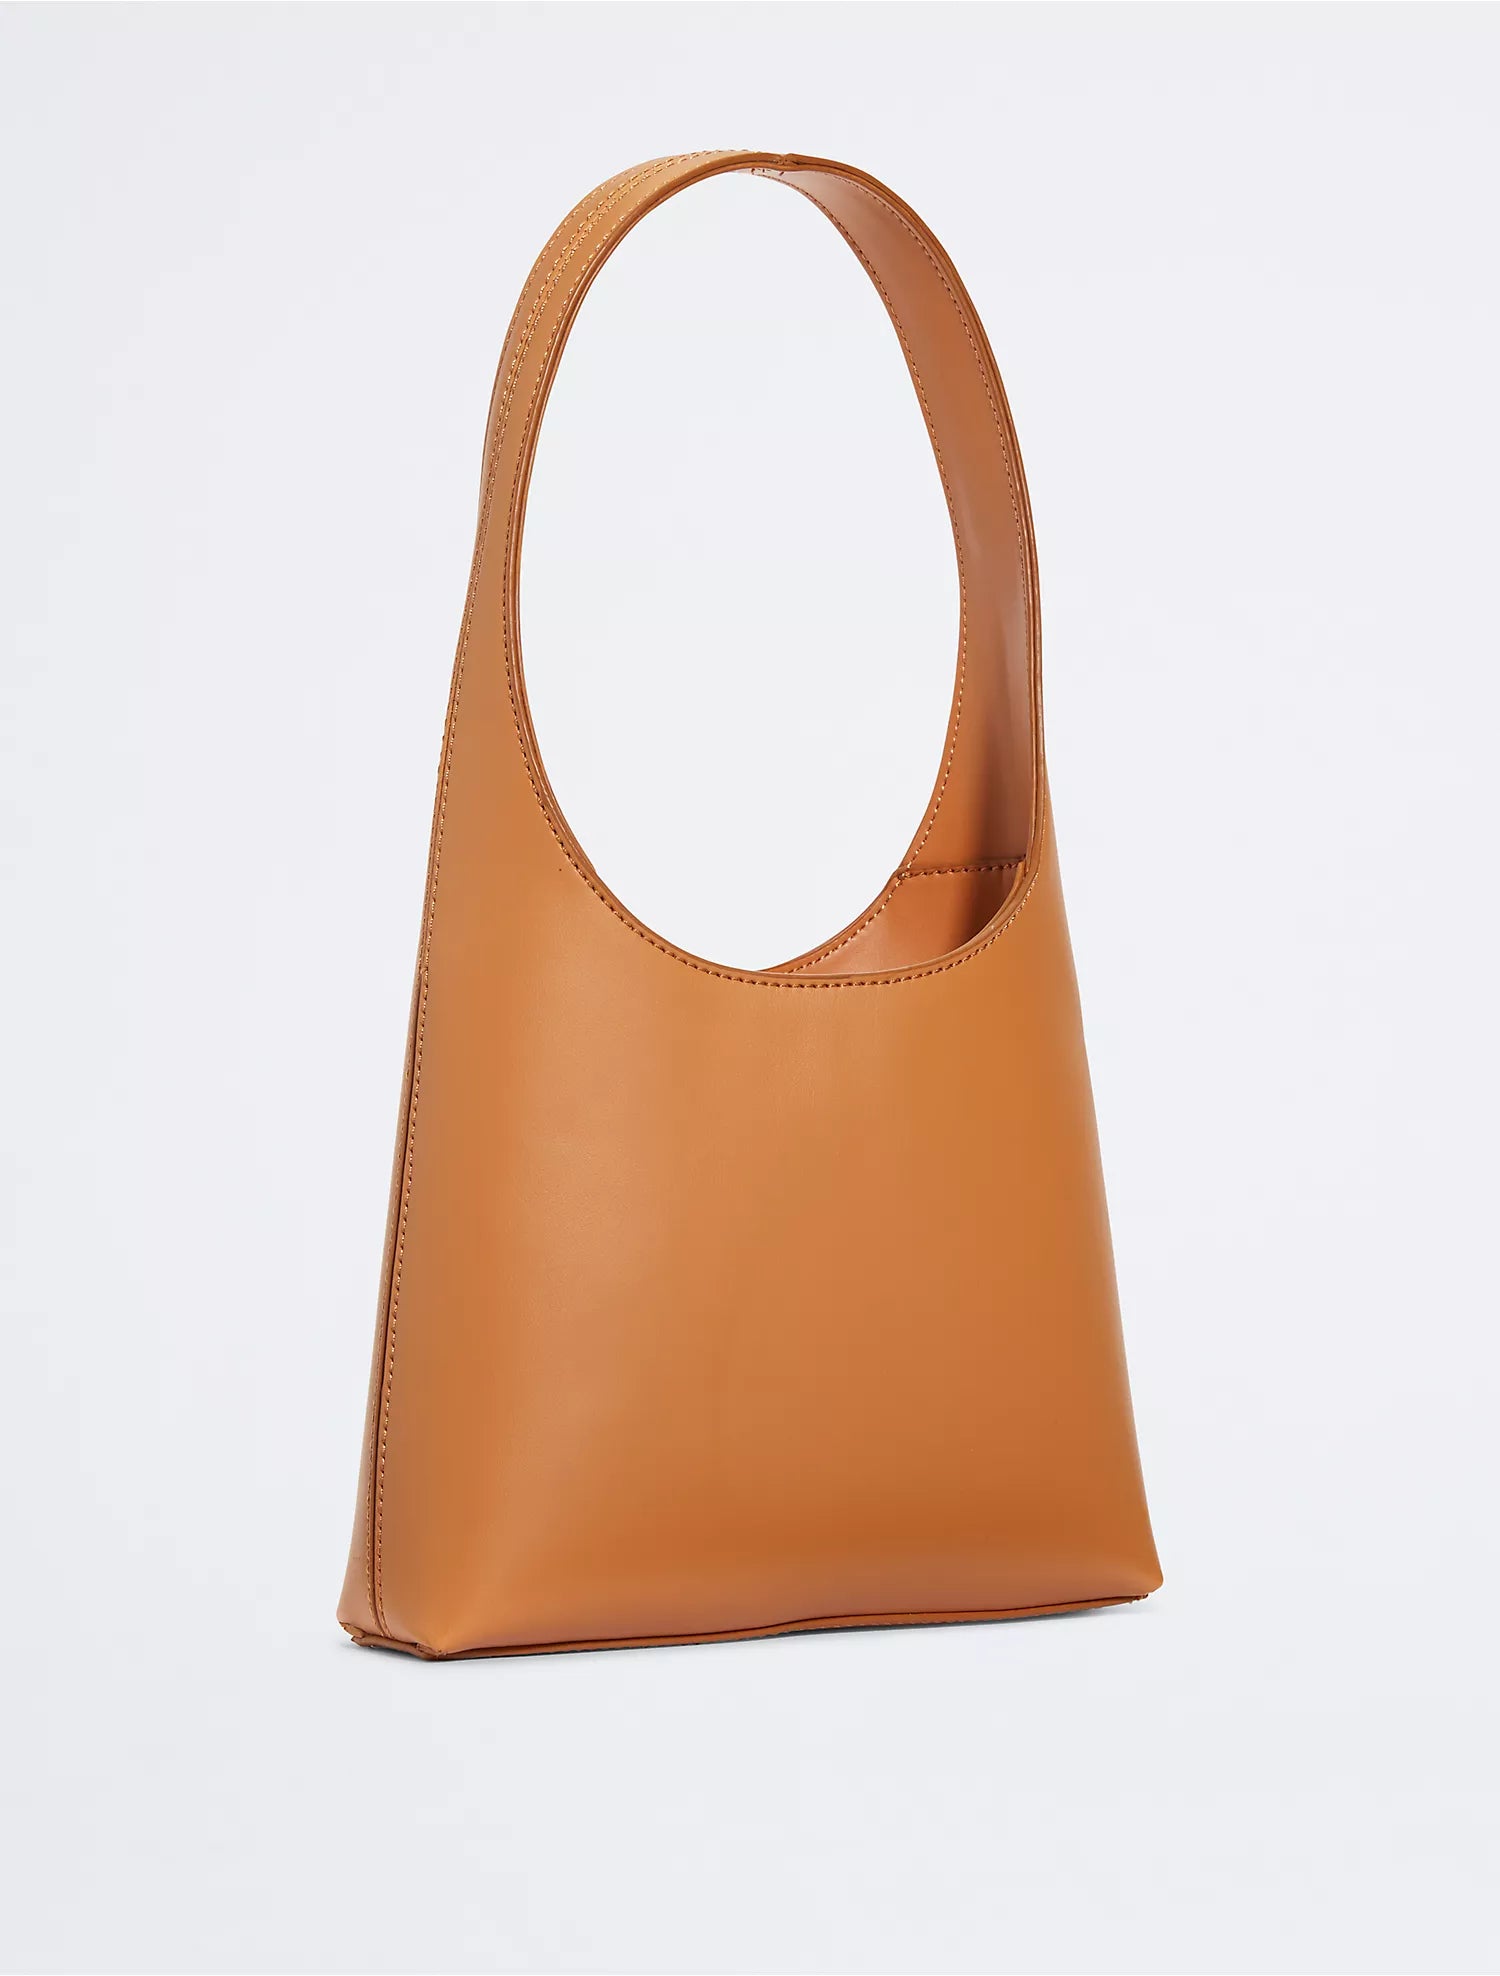 Calvin Klein Elemental Curve Shoulder Bag - Women